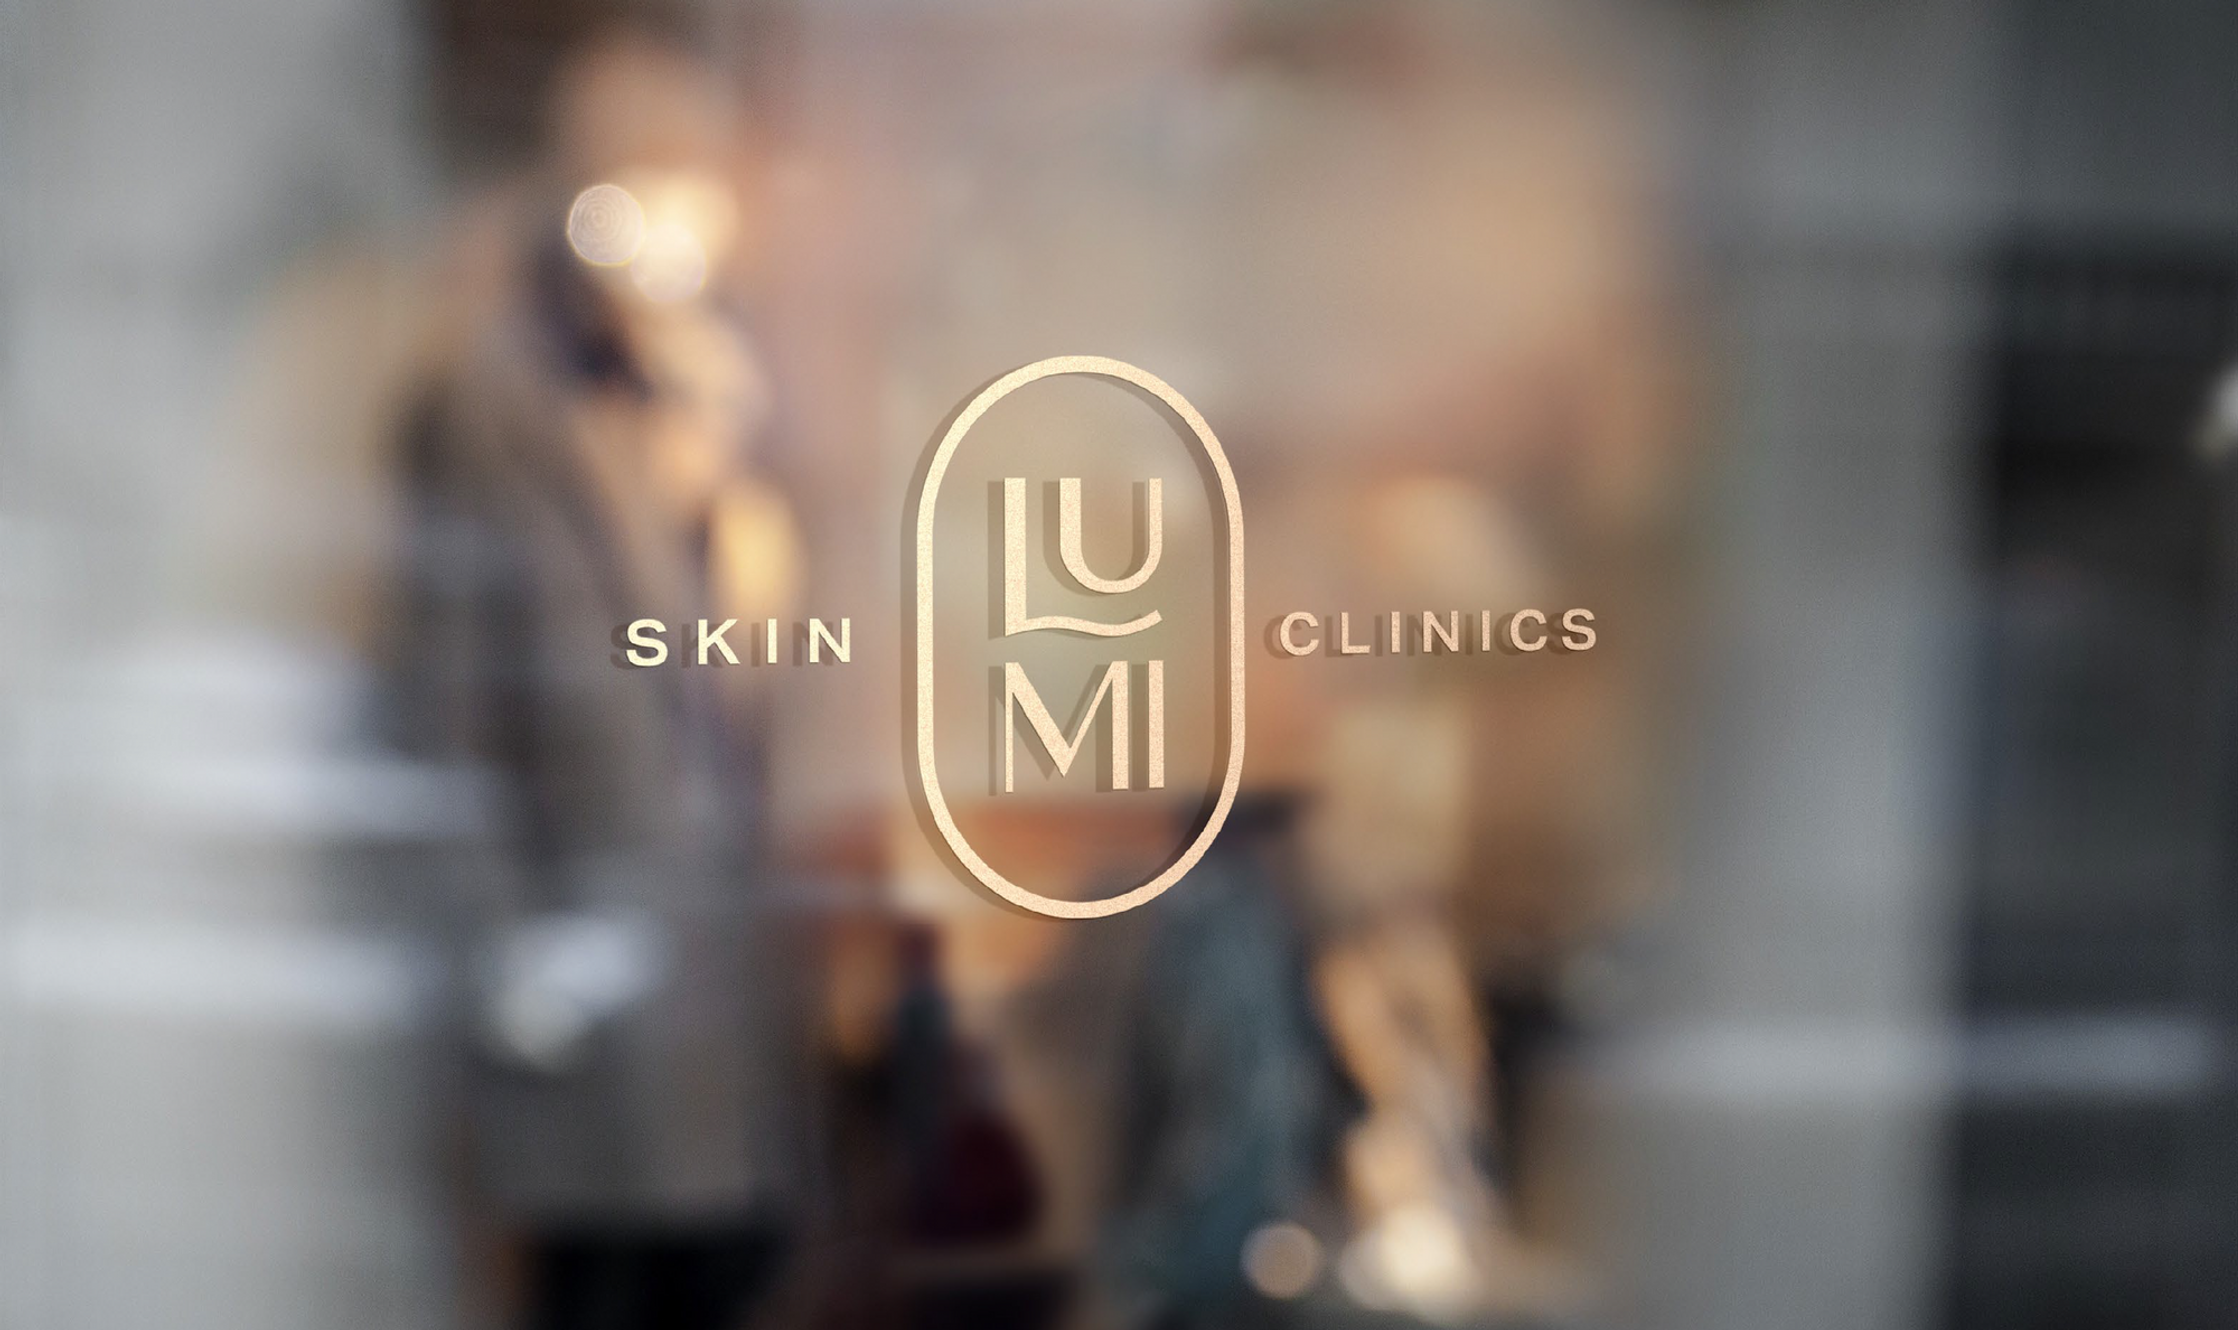 Skin Care Clinic Sydney | Beauty Treatment Clinic Sydney | Best Beauty Salon